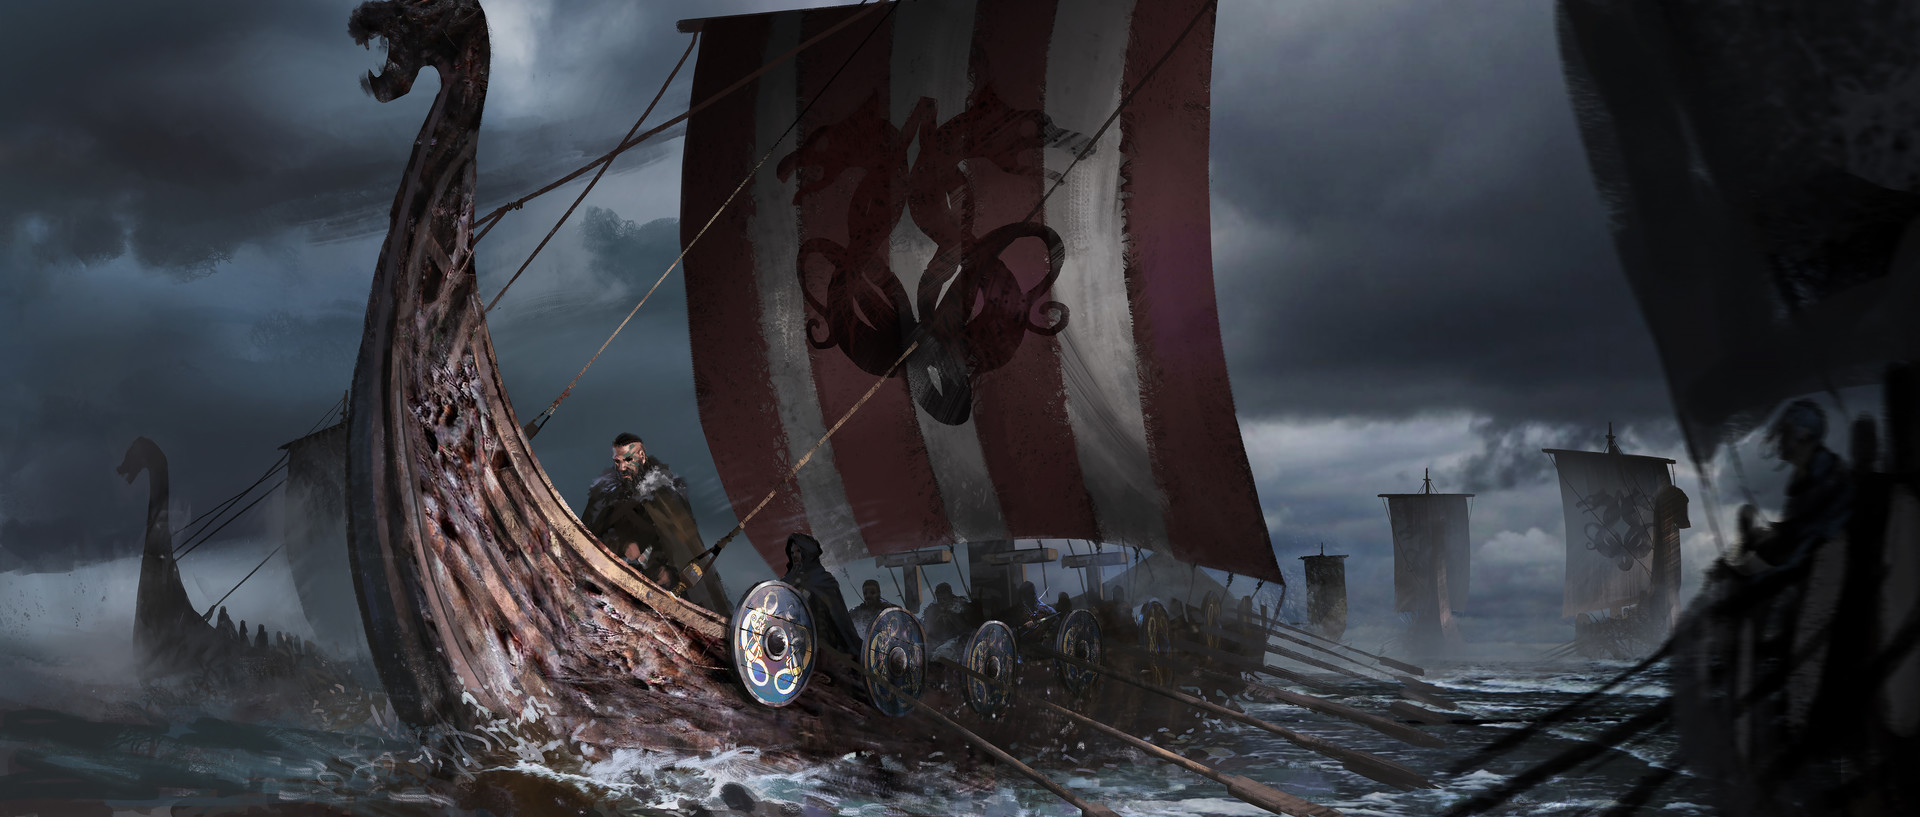 General 1920x817 digital art warrior soldier ship sea fantasy art shield